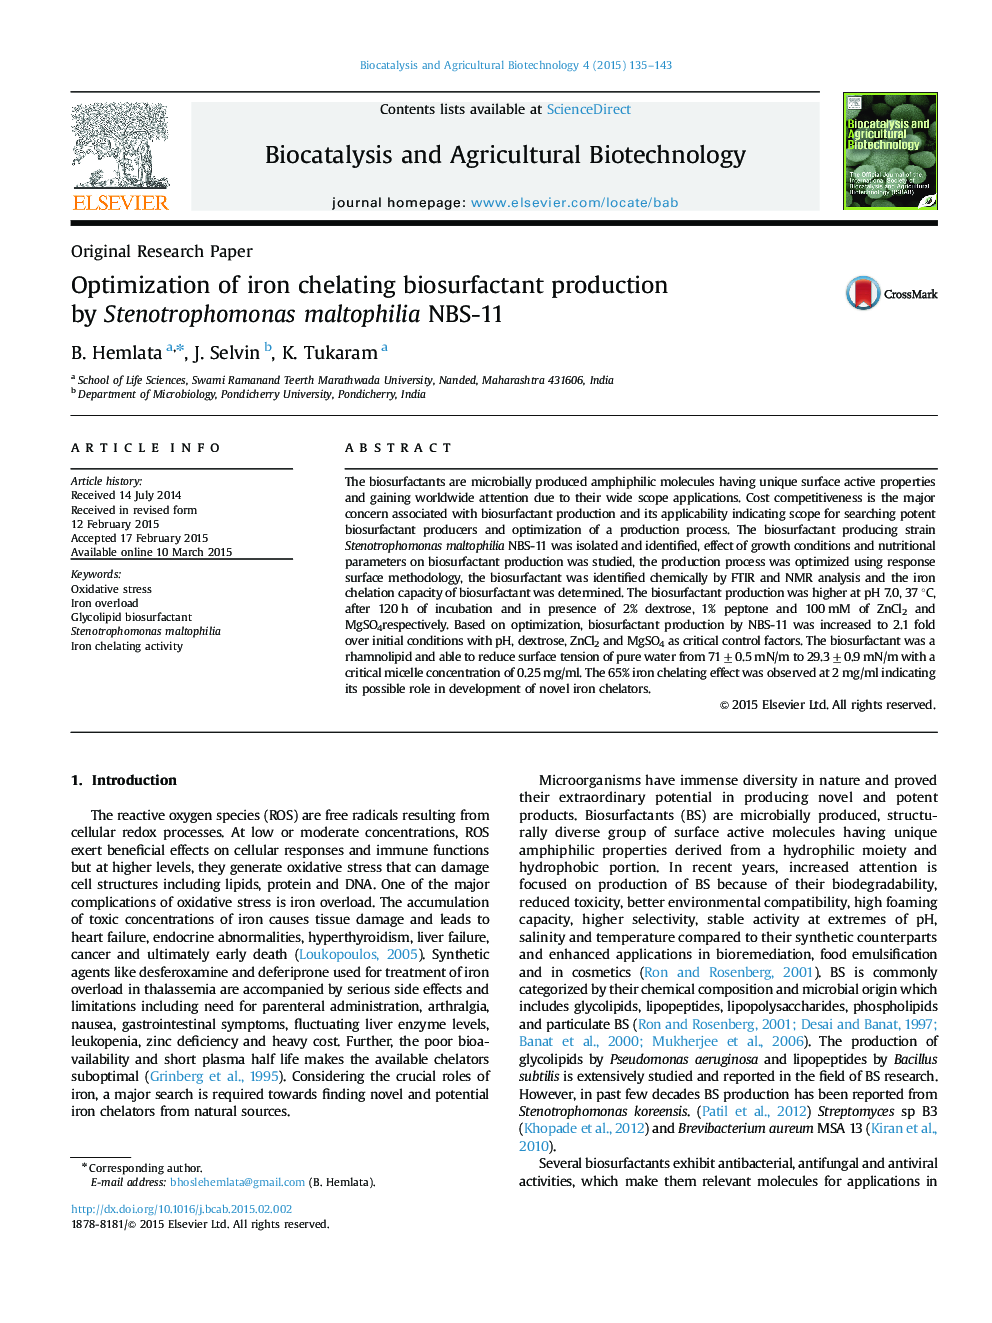 Optimization of iron chelating biosurfactant production by Stenotrophomonas maltophilia NBS-11